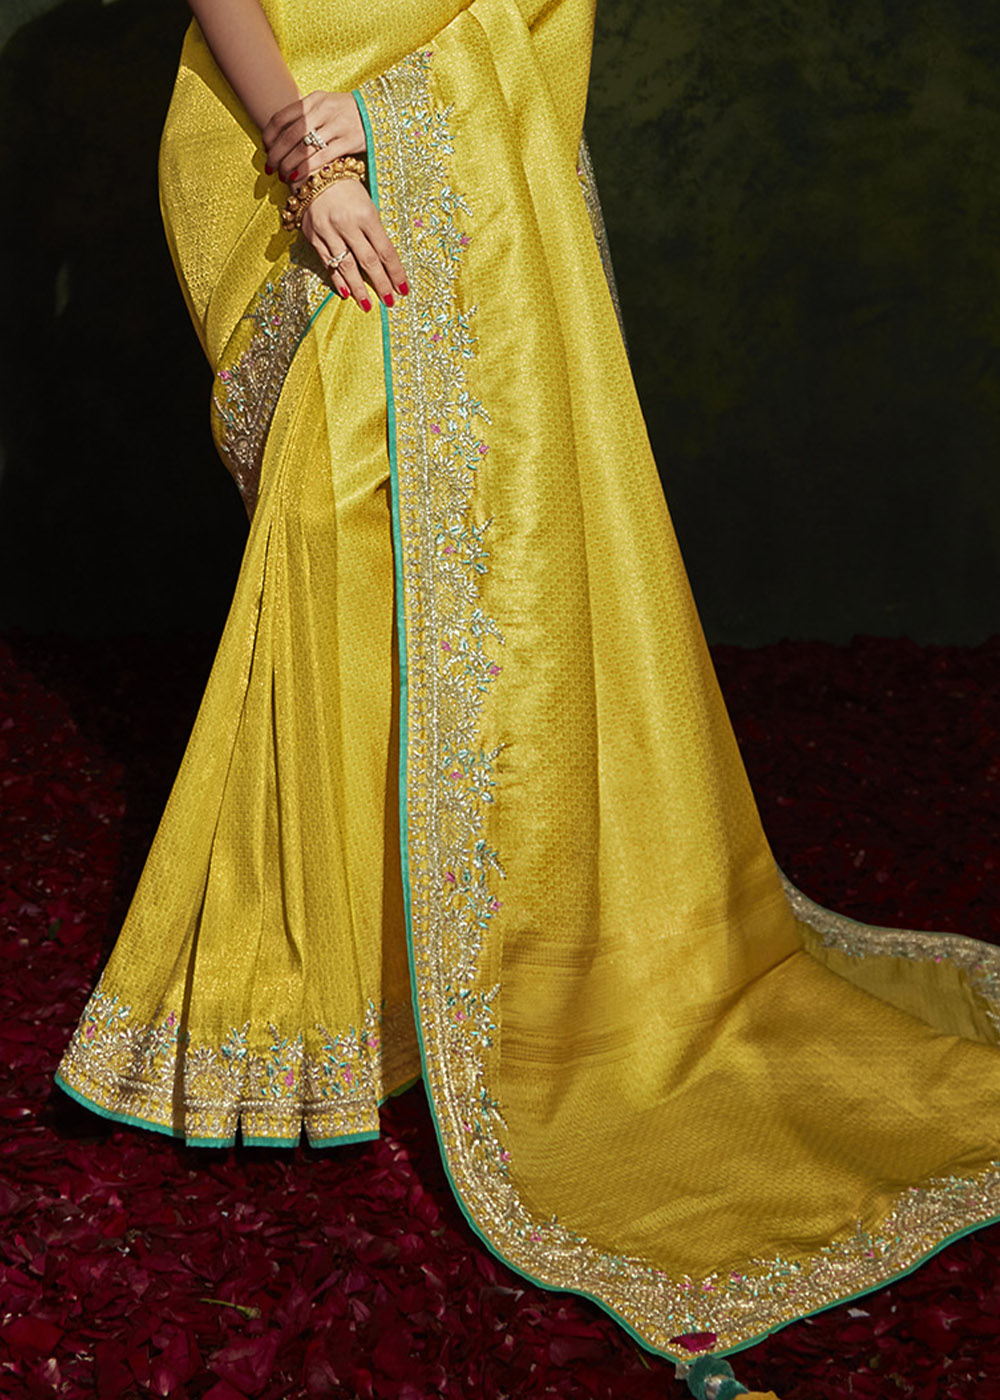 Radiant Glow of the Yellow Designer Silk Saree